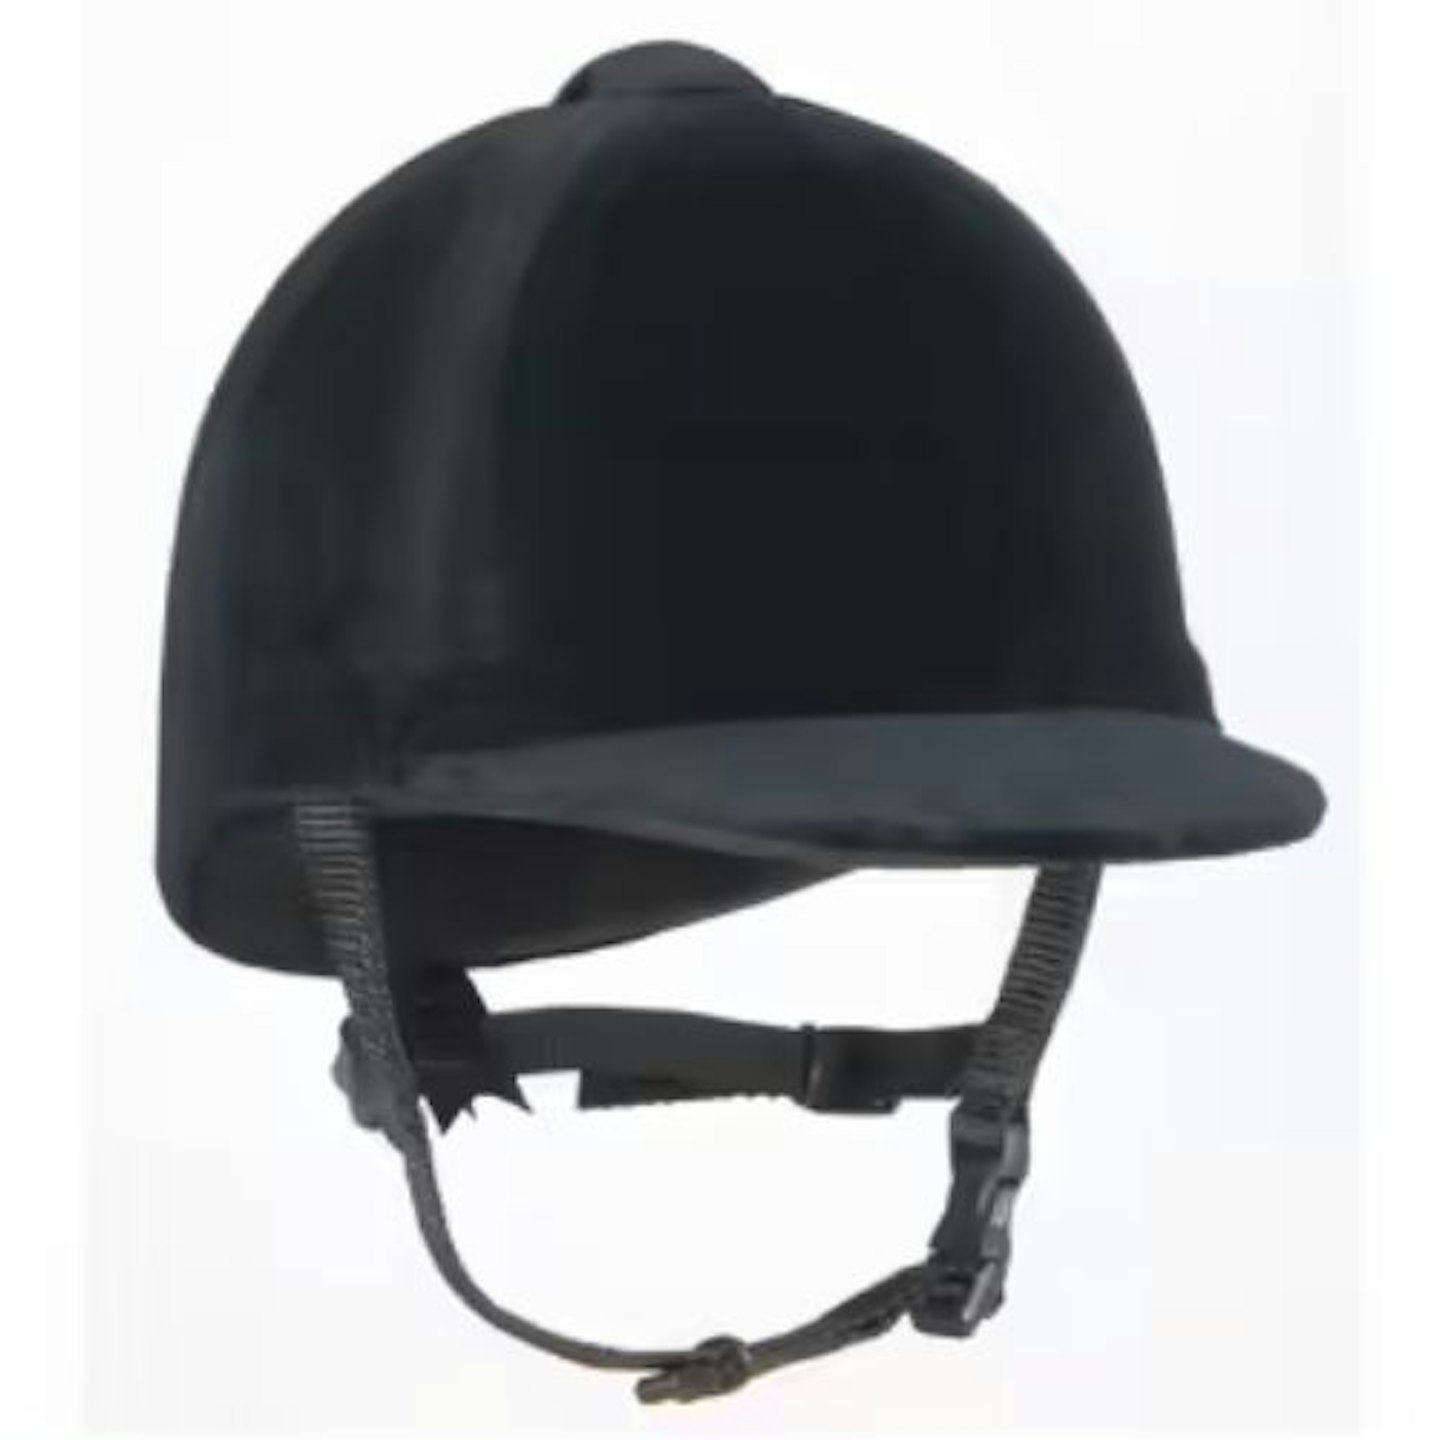 Best children's riding hats CPX-3000 Junior Riding Hat Black